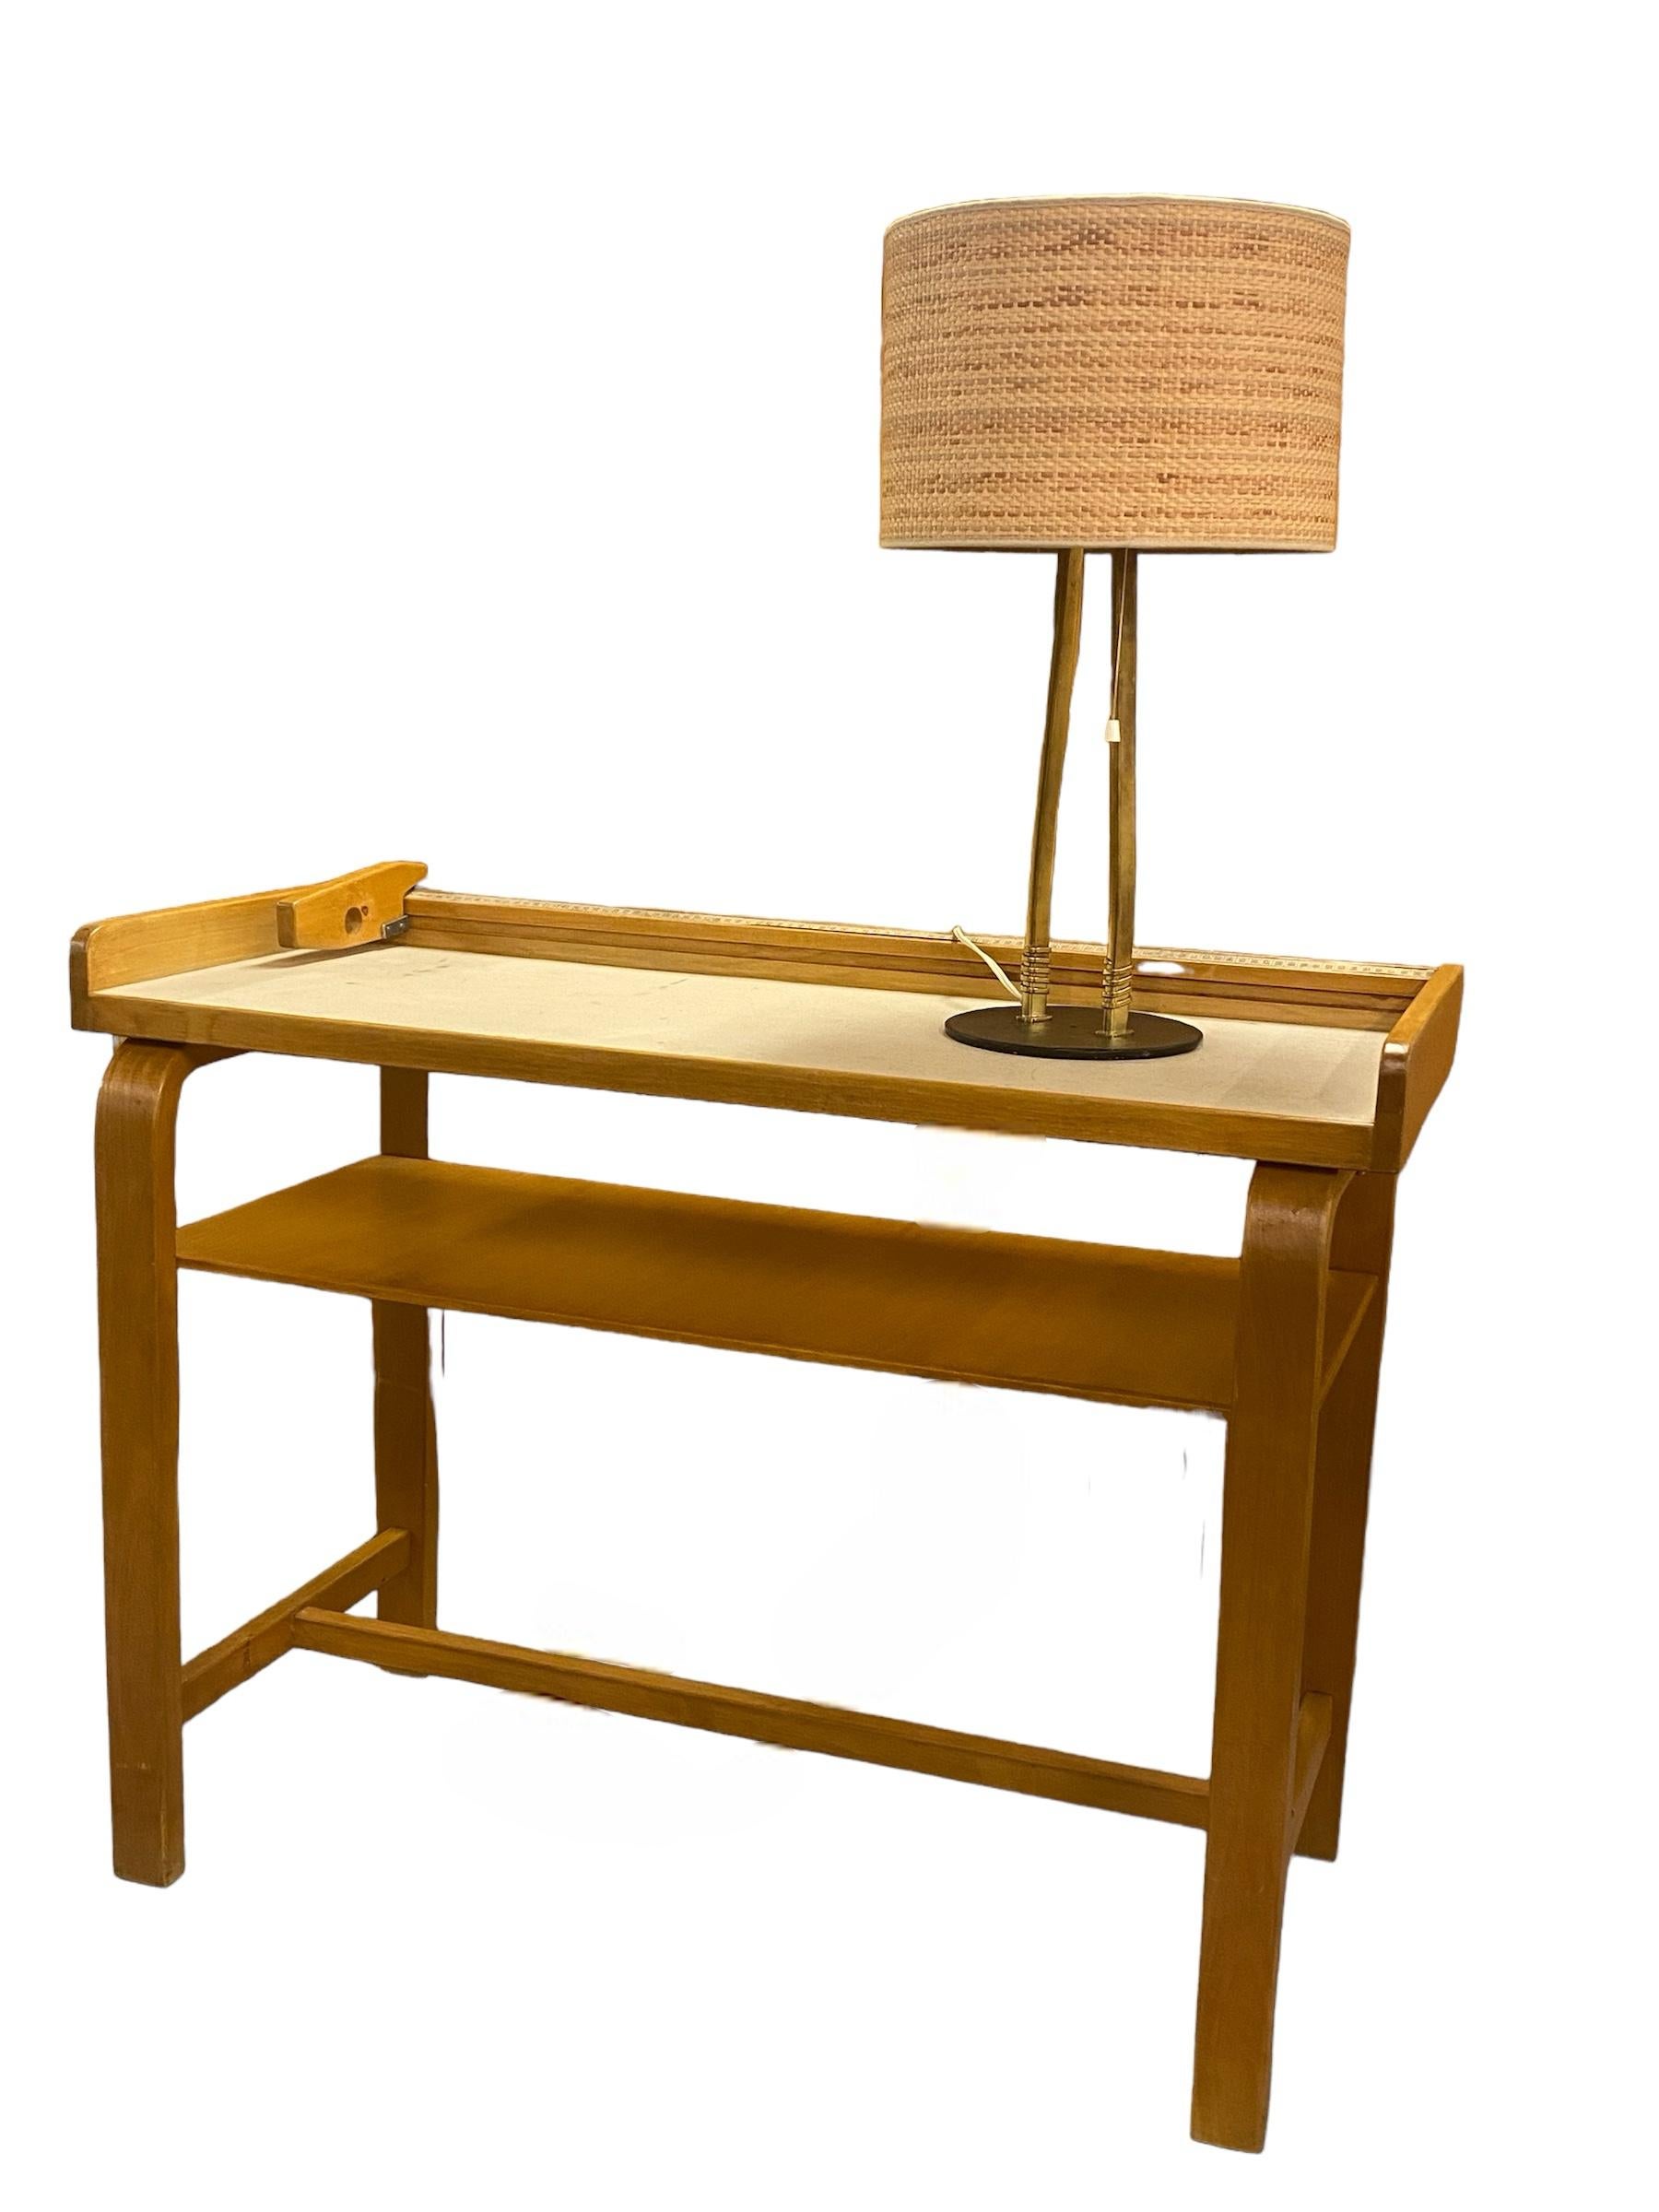 Birch  Aino Aalto Rare Measuring Table Artek 1950's For Sale